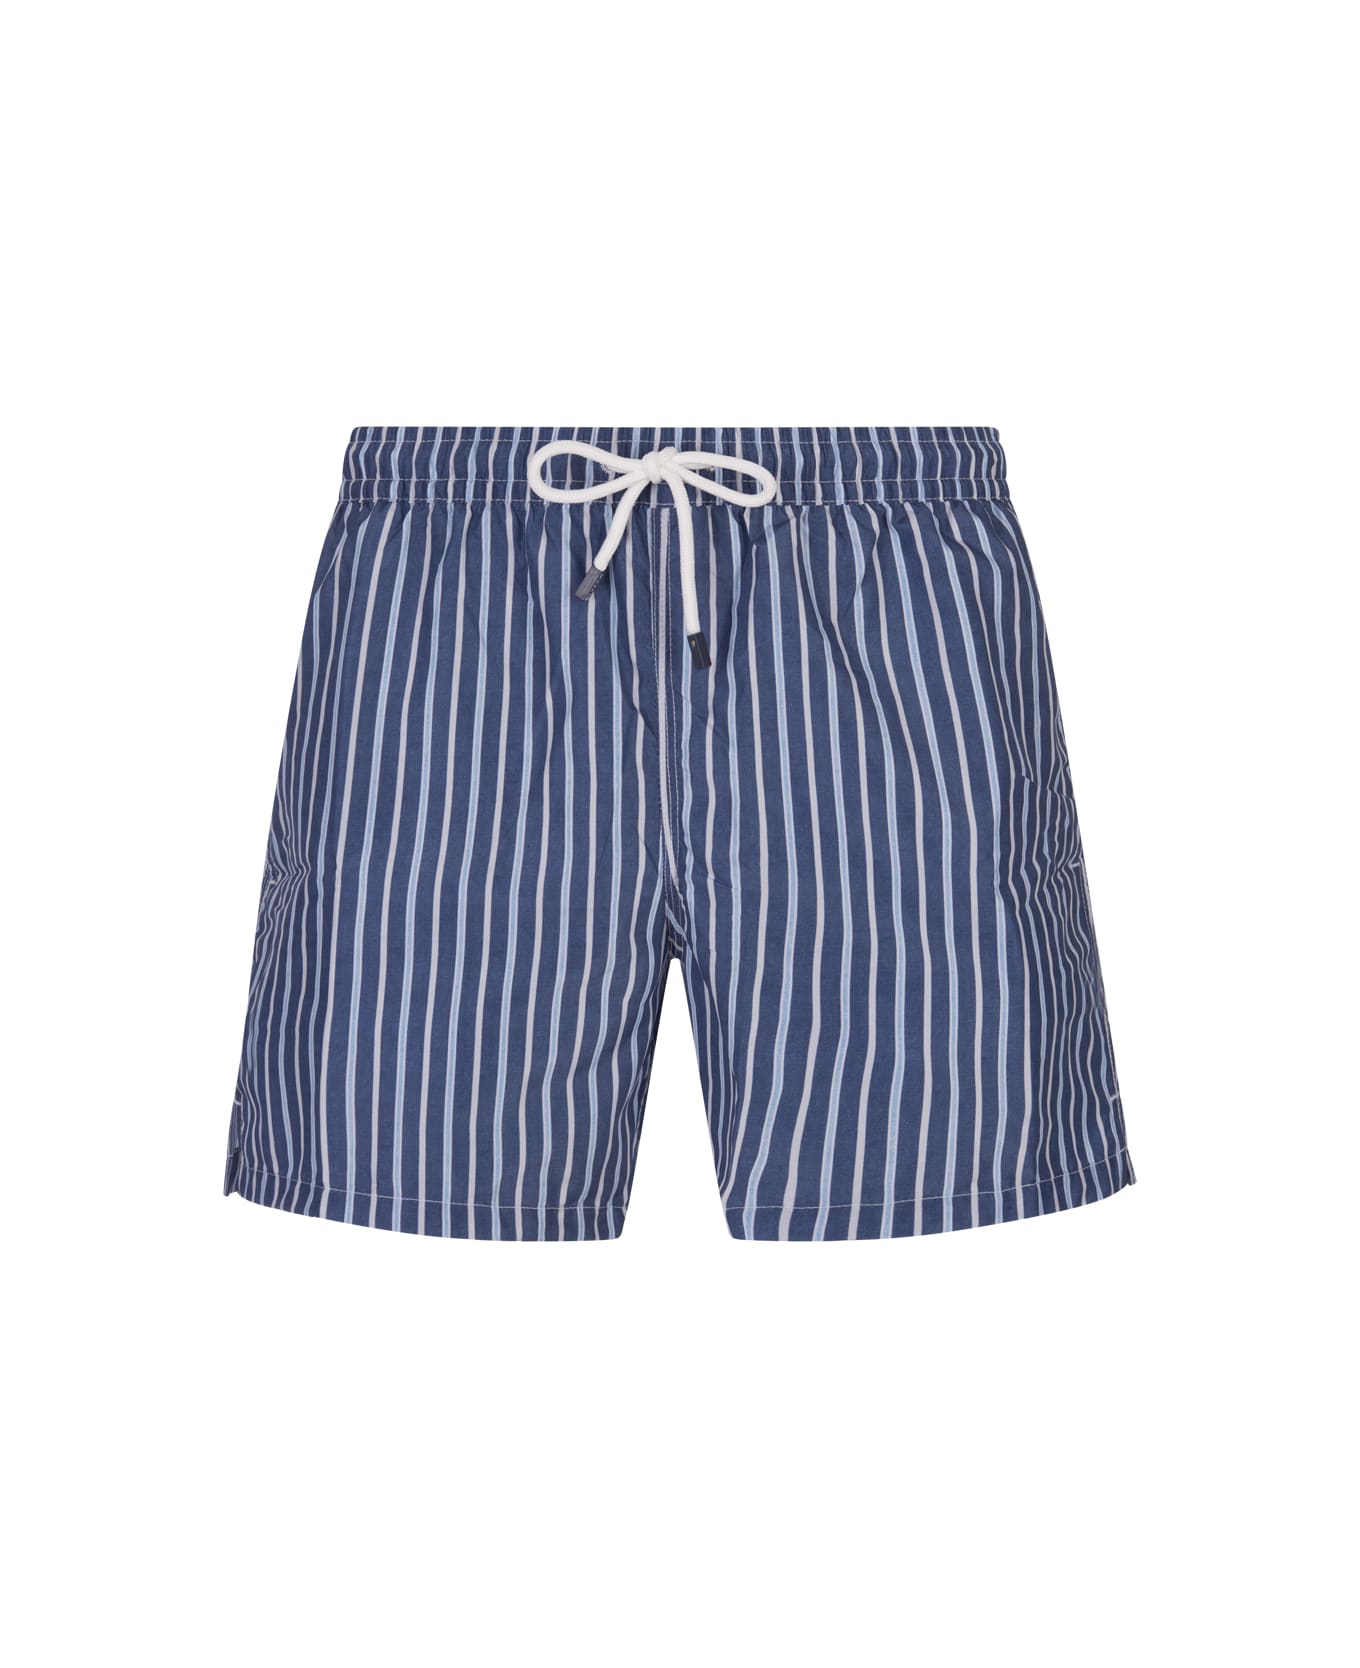 Fedeli Dark Blue Striped Swim Shorts - Blue